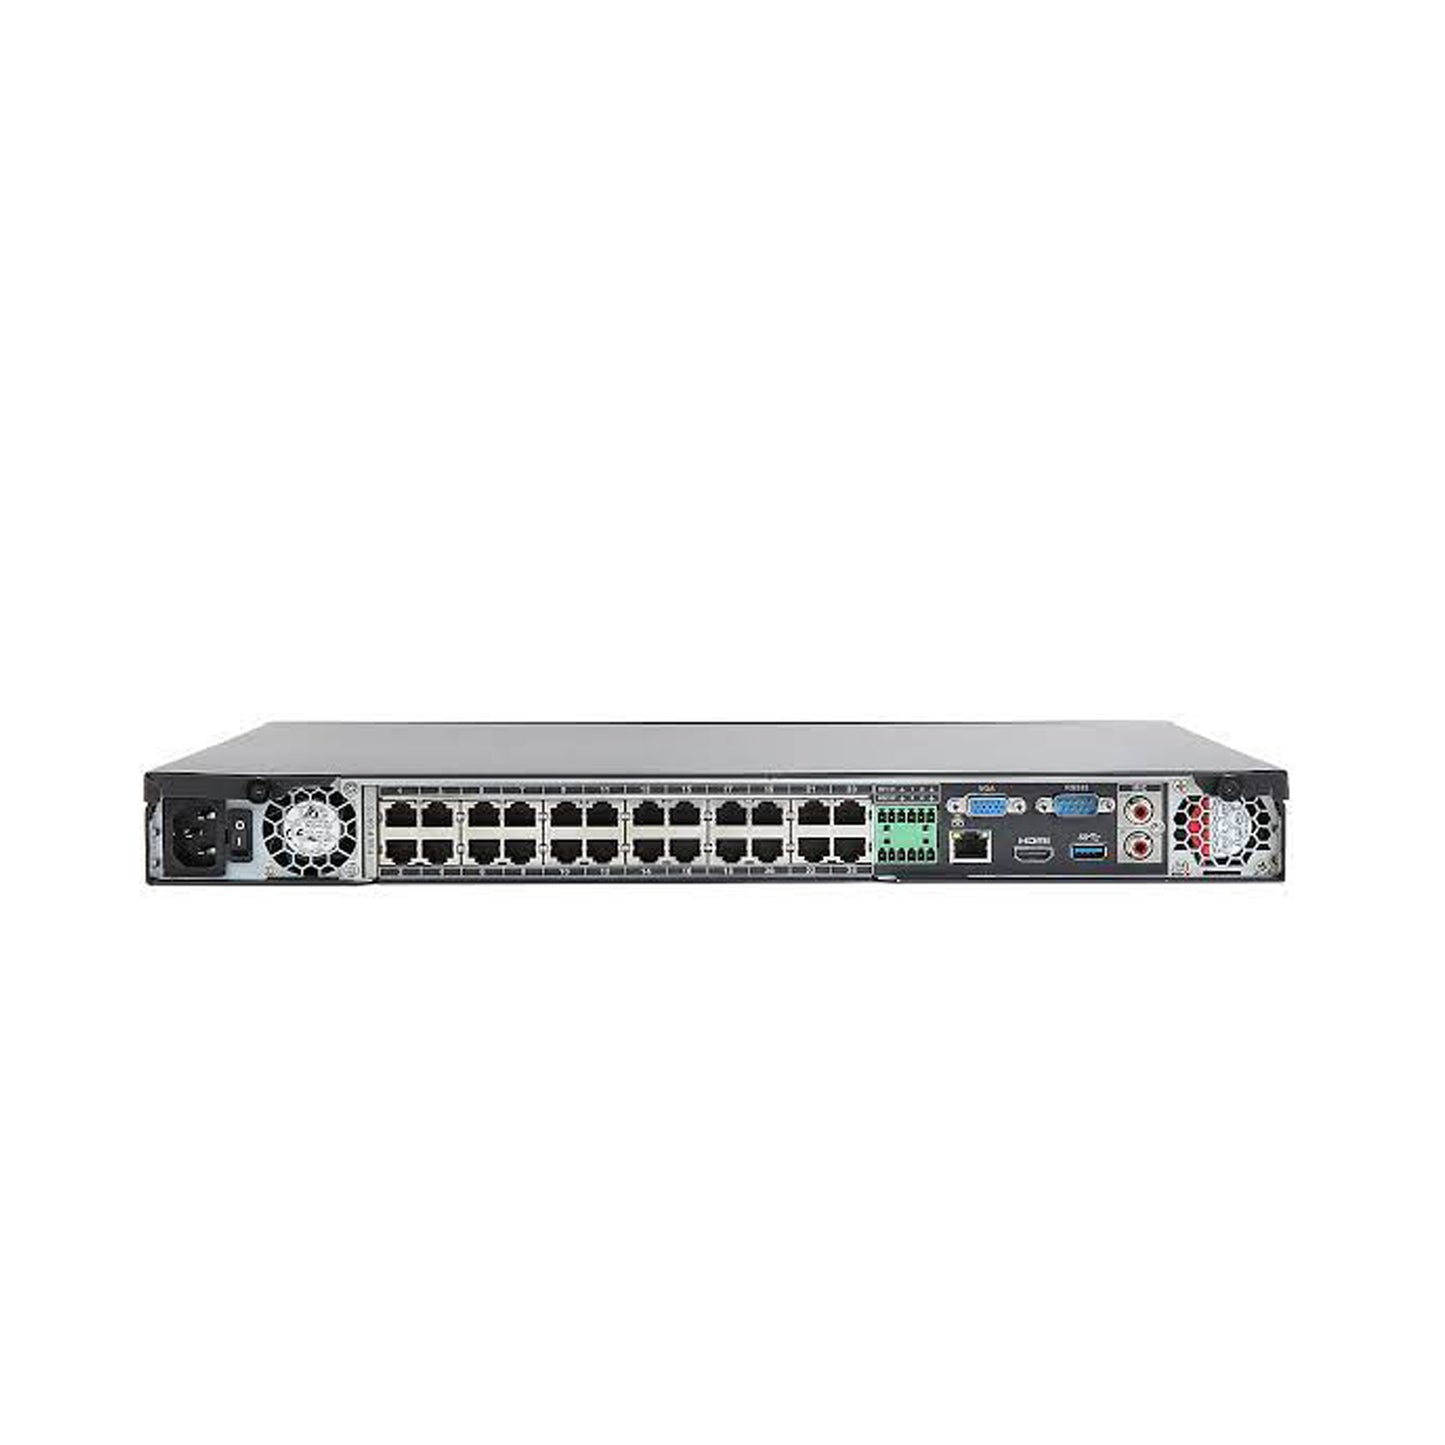 Dahua NVR, DHI-NVR5224-24P-4KS2, 24CH Pro Series Ultra 4K Network Video Recorder